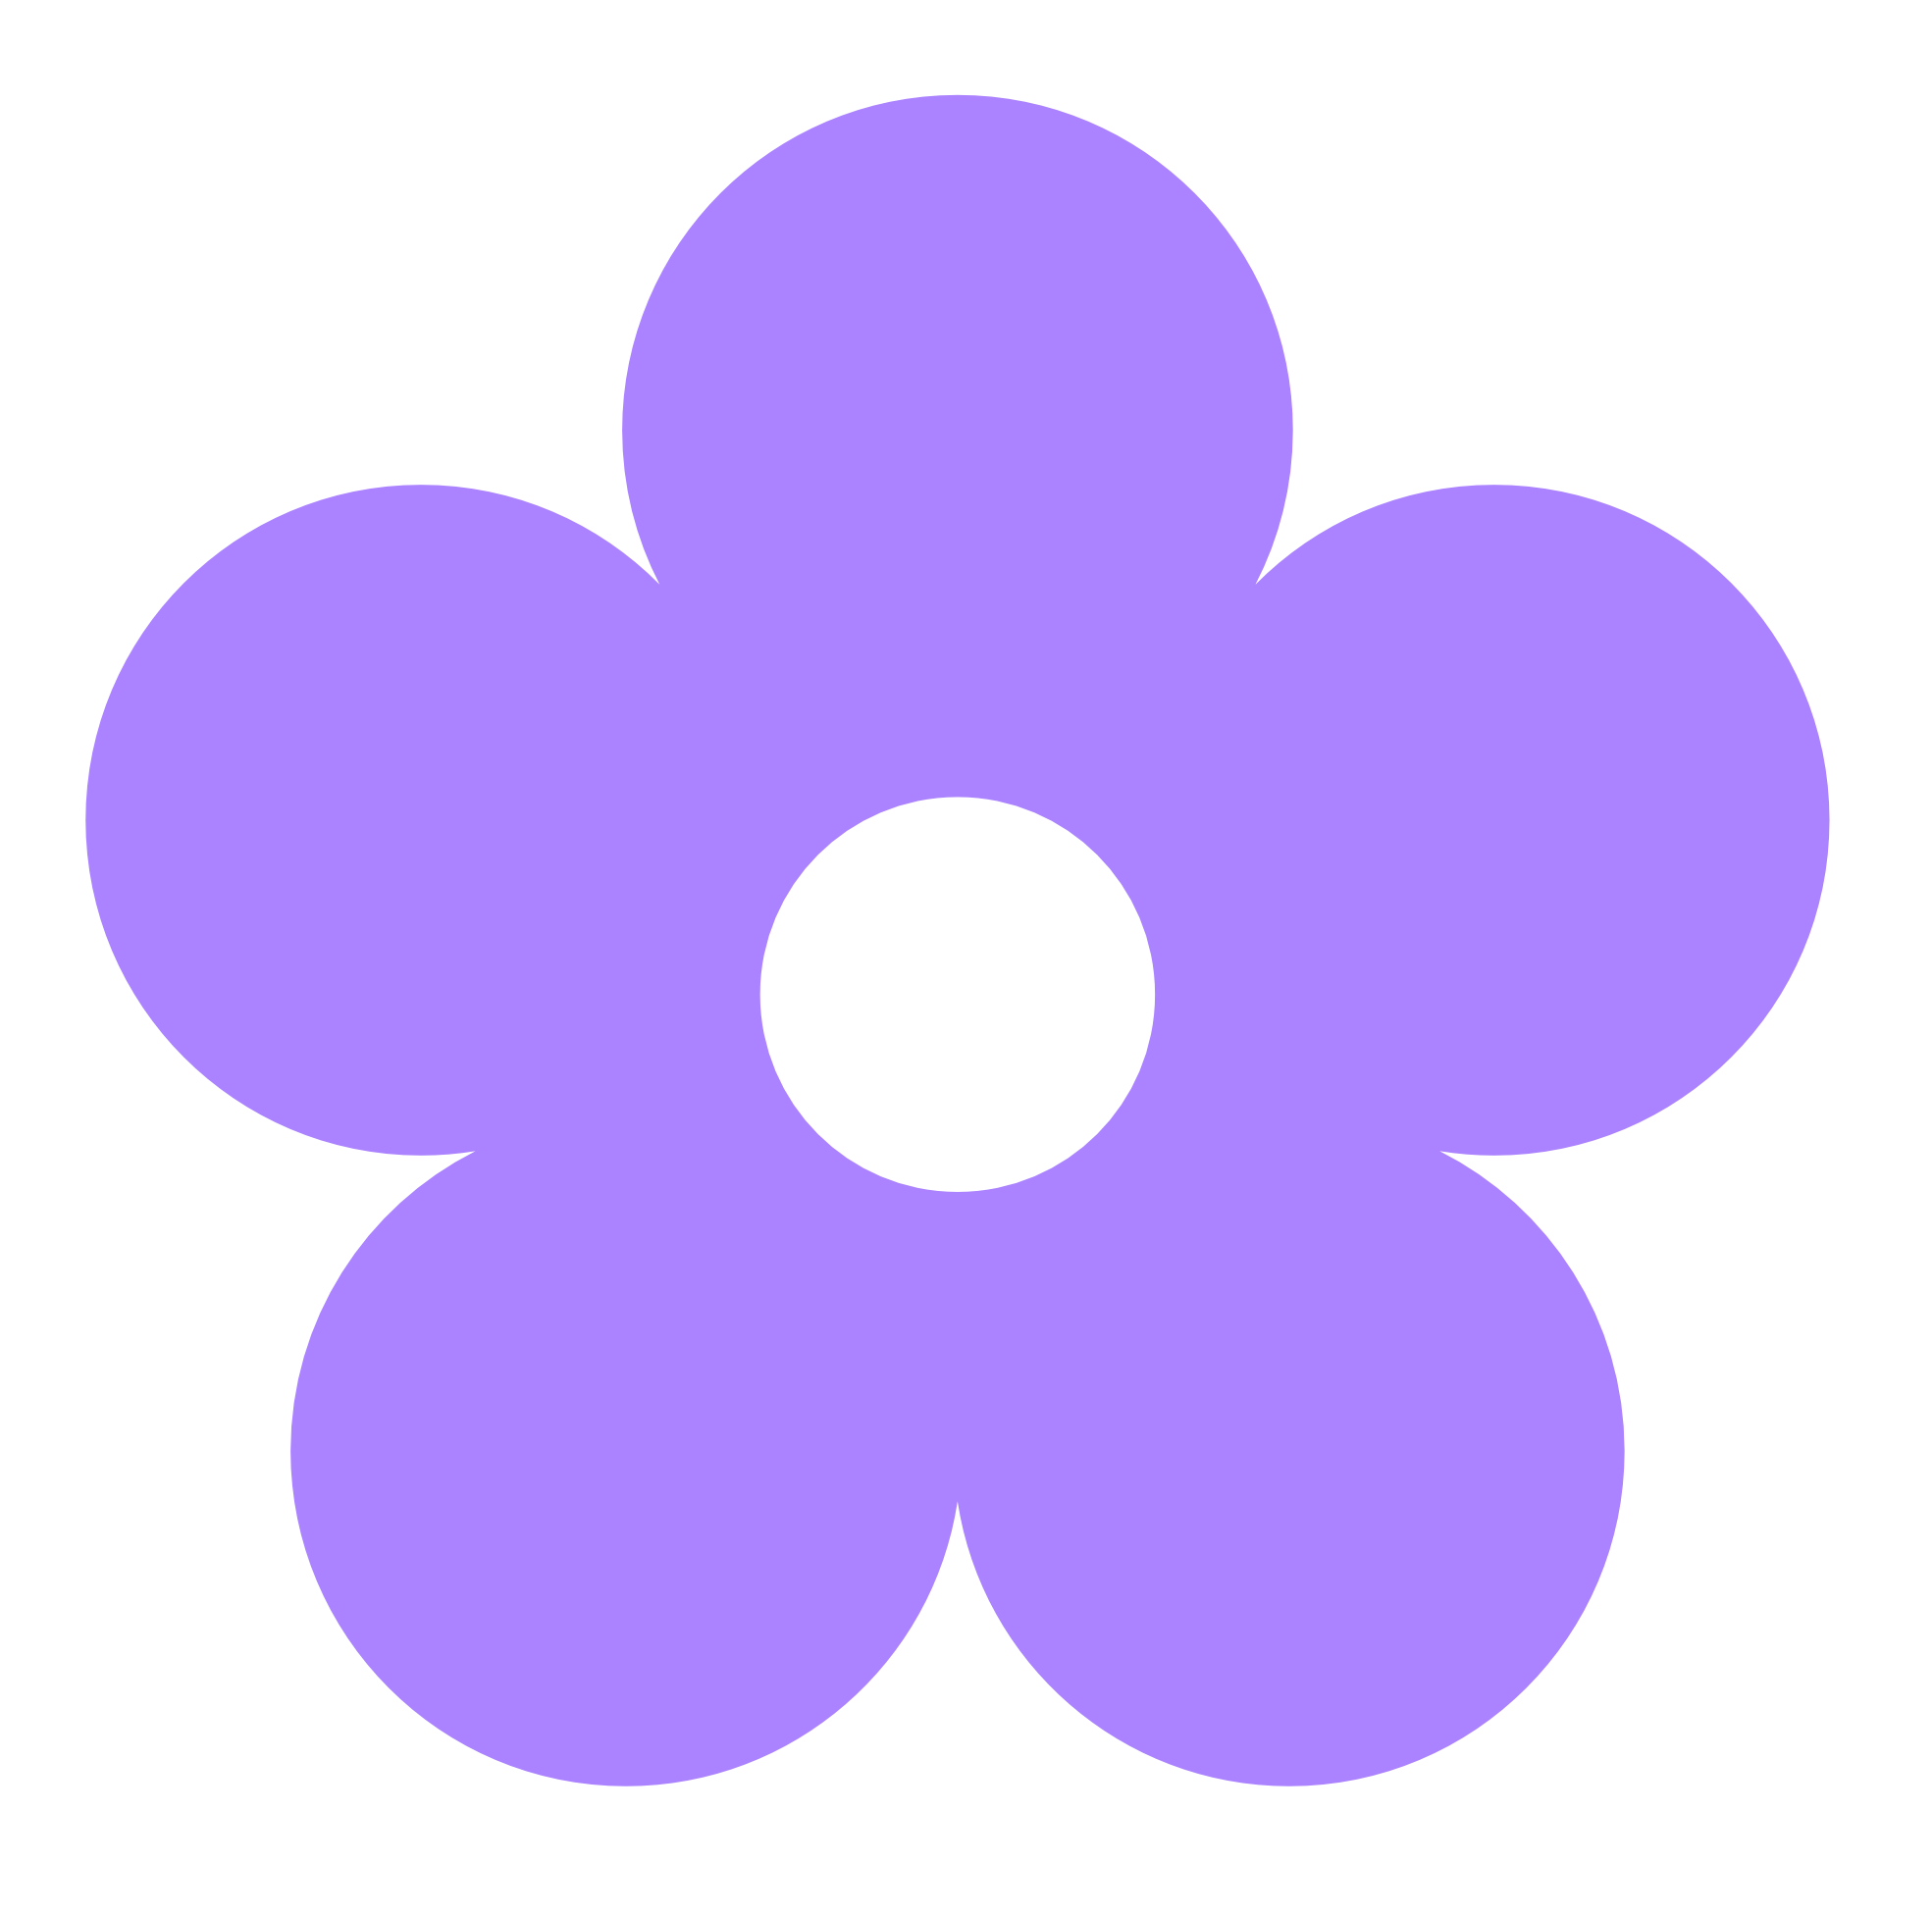 Purple Flower Clip Art At Clk